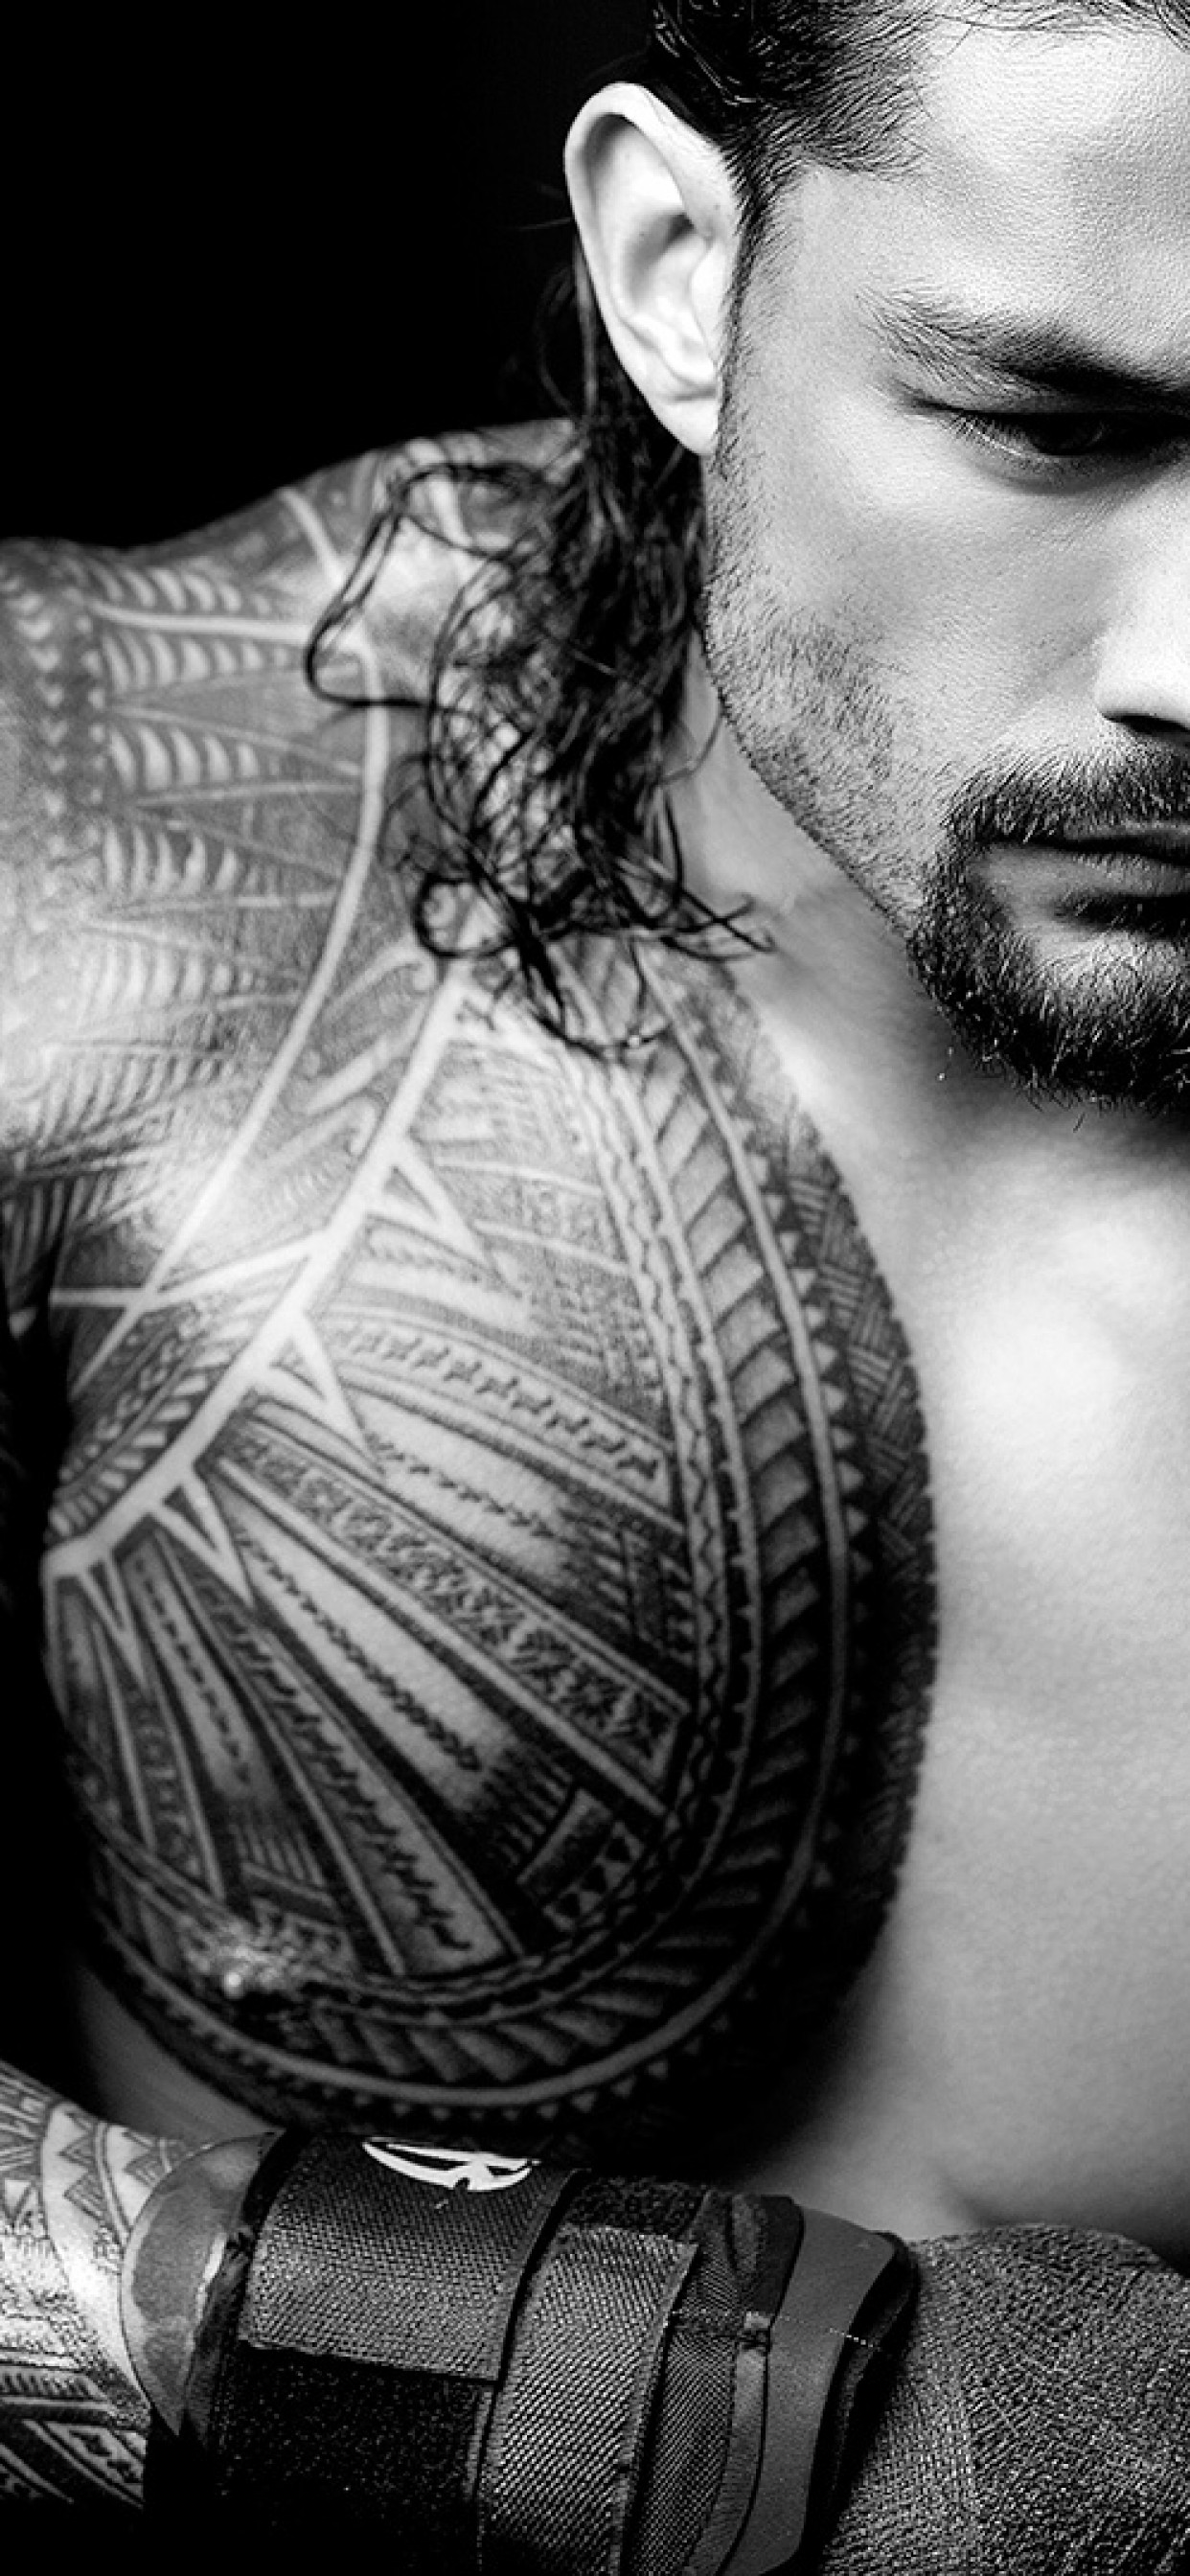 roman reigns wallpaper,facial hair,shoulder,beard,arm,black and white